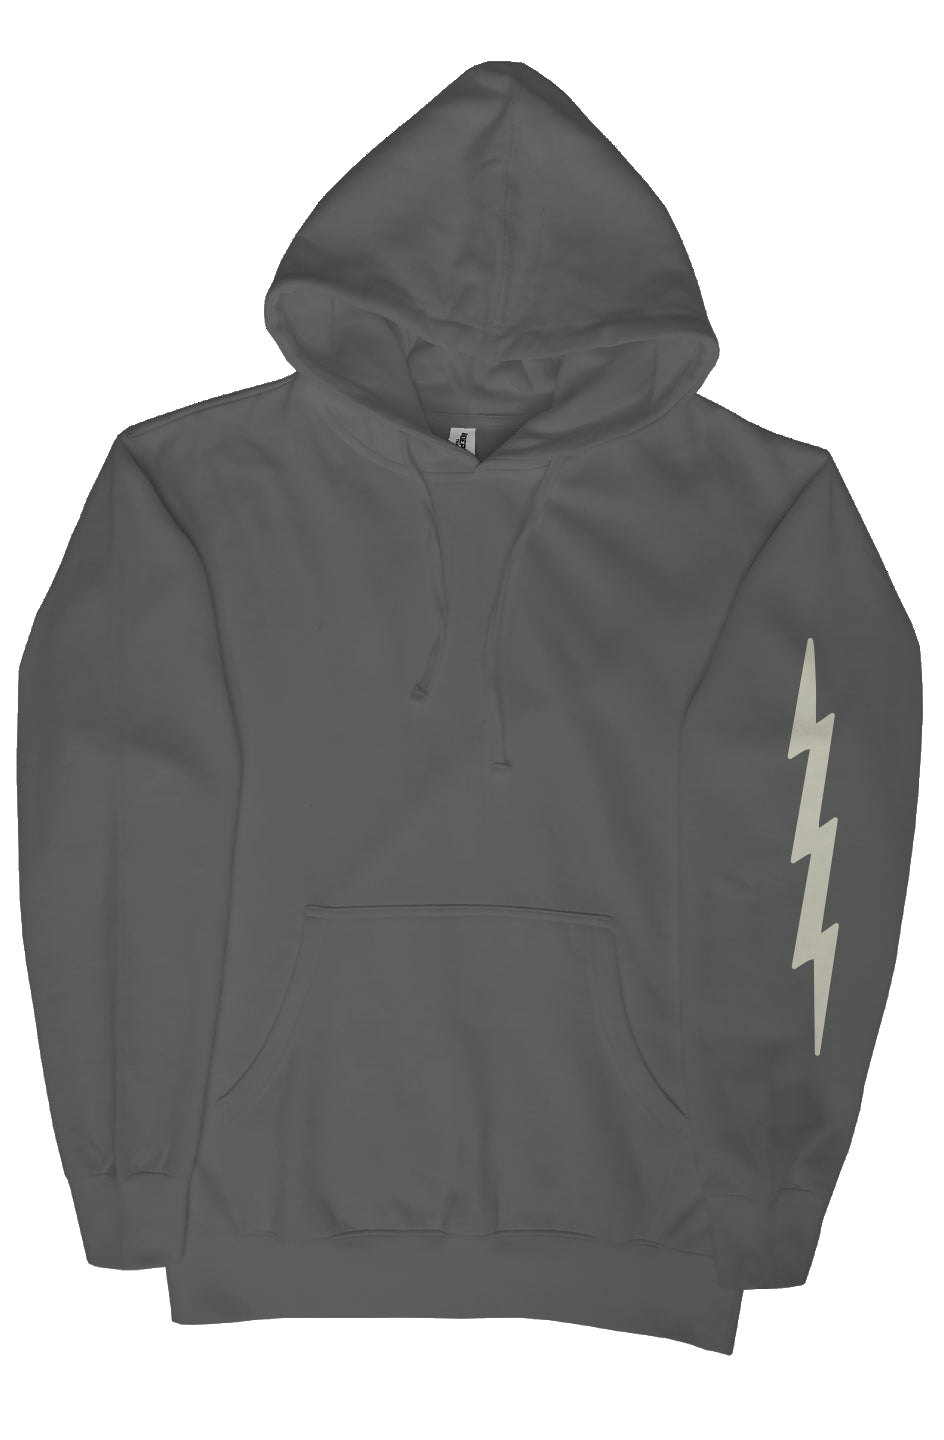 NashTeeth XLongBolts independent heavyweight pullover hoodie